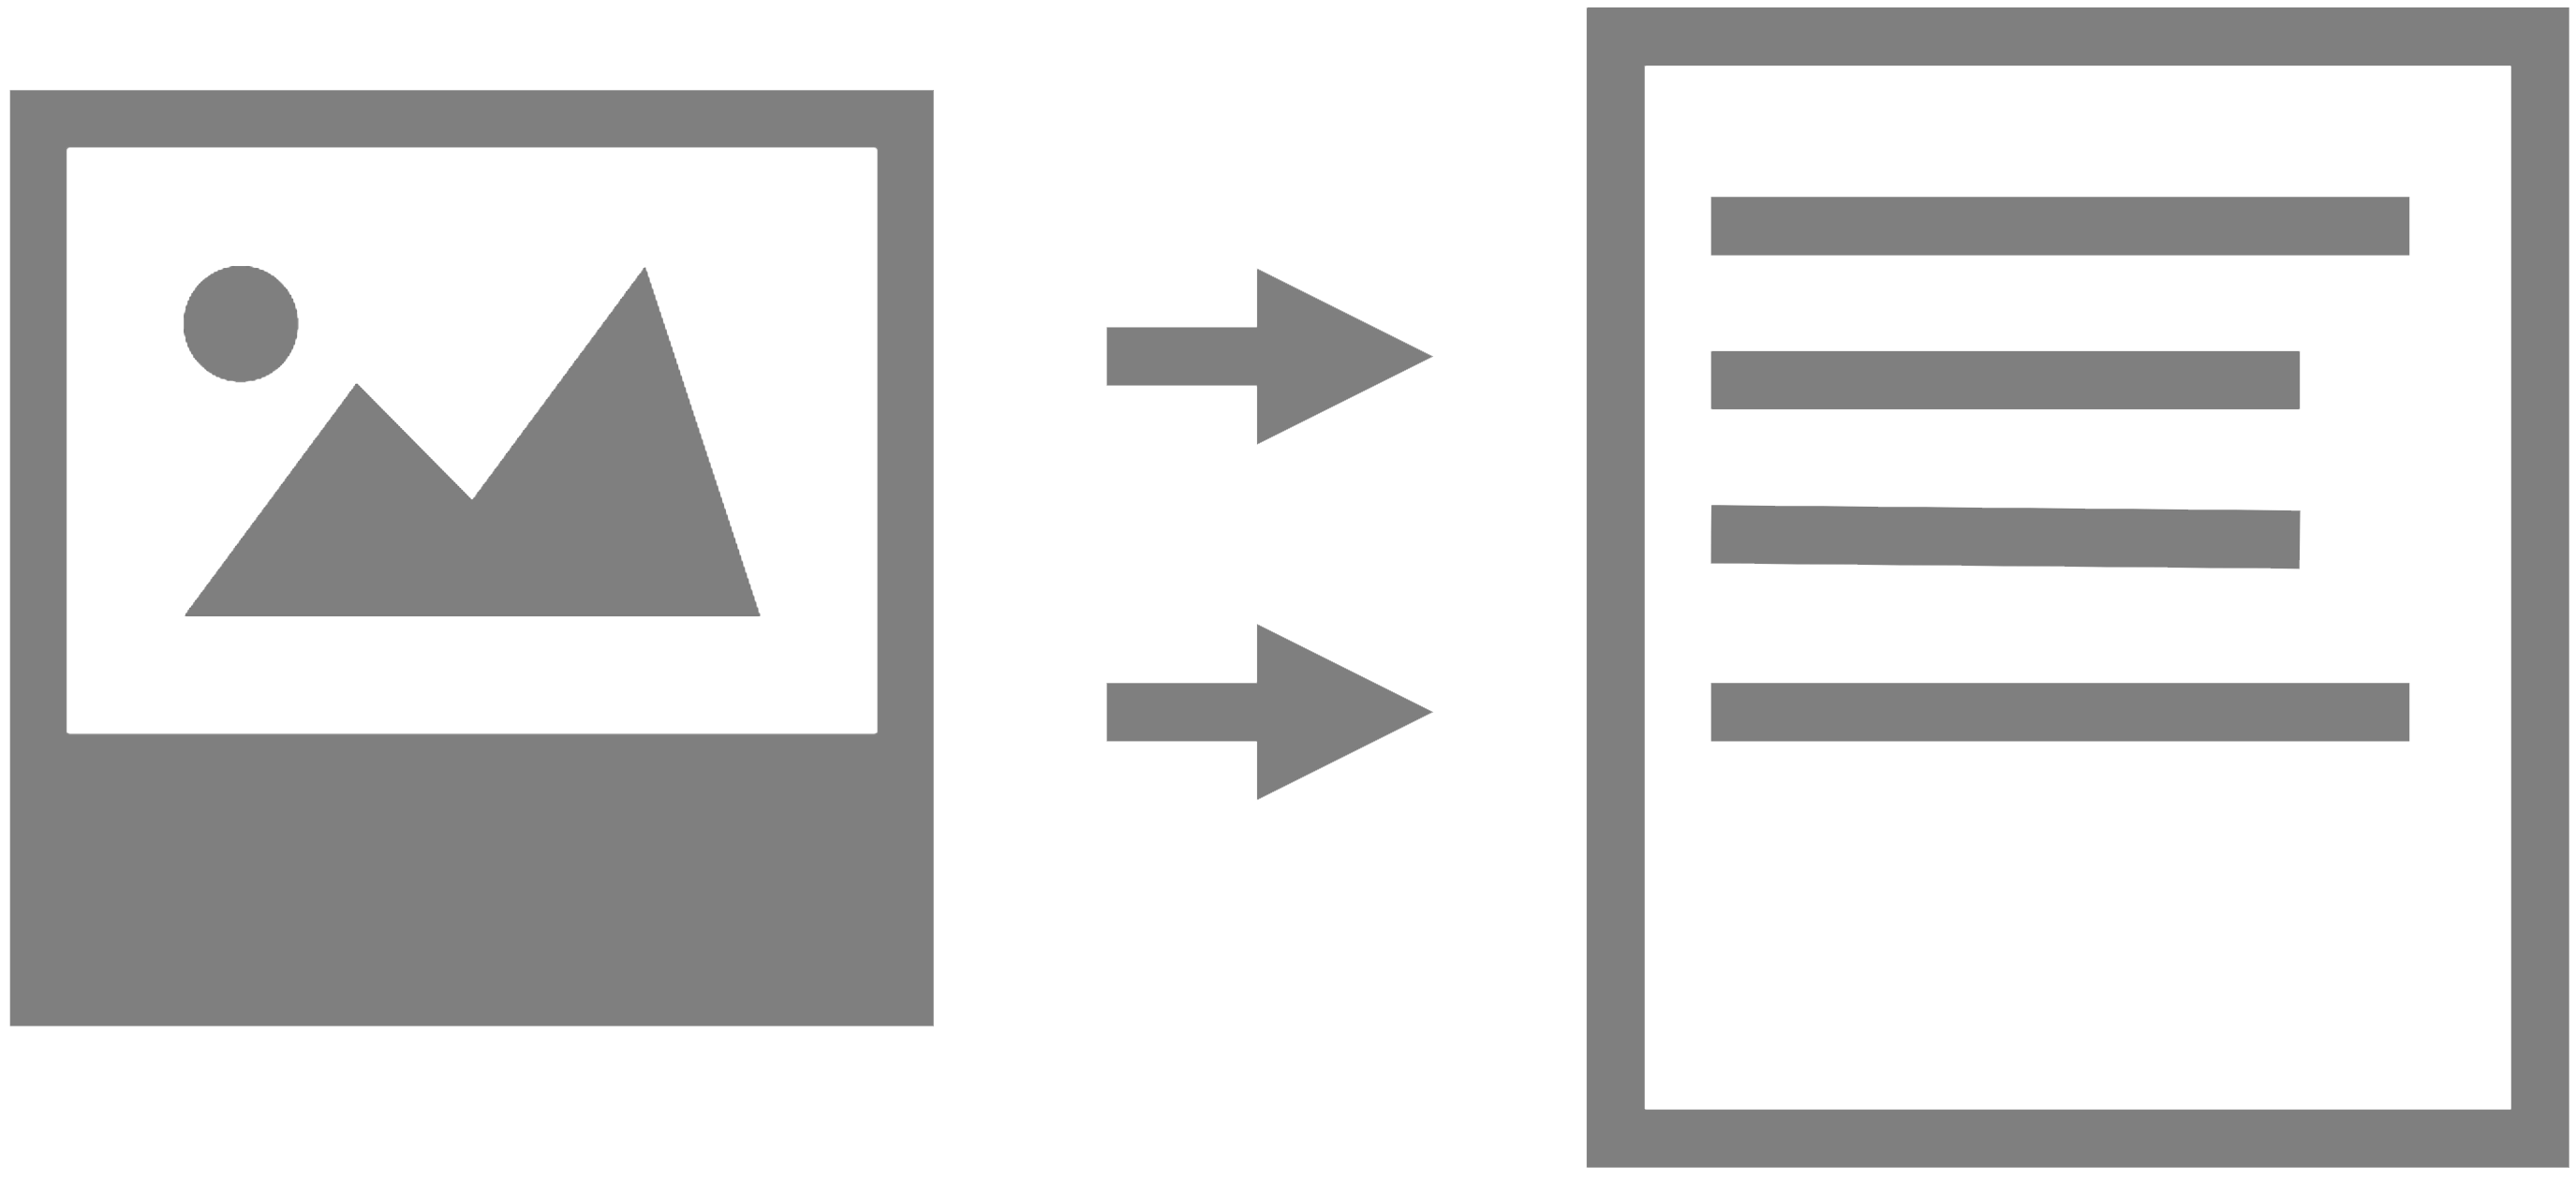 polaroid photo icon with arrows pointing toward icon depicting a text document